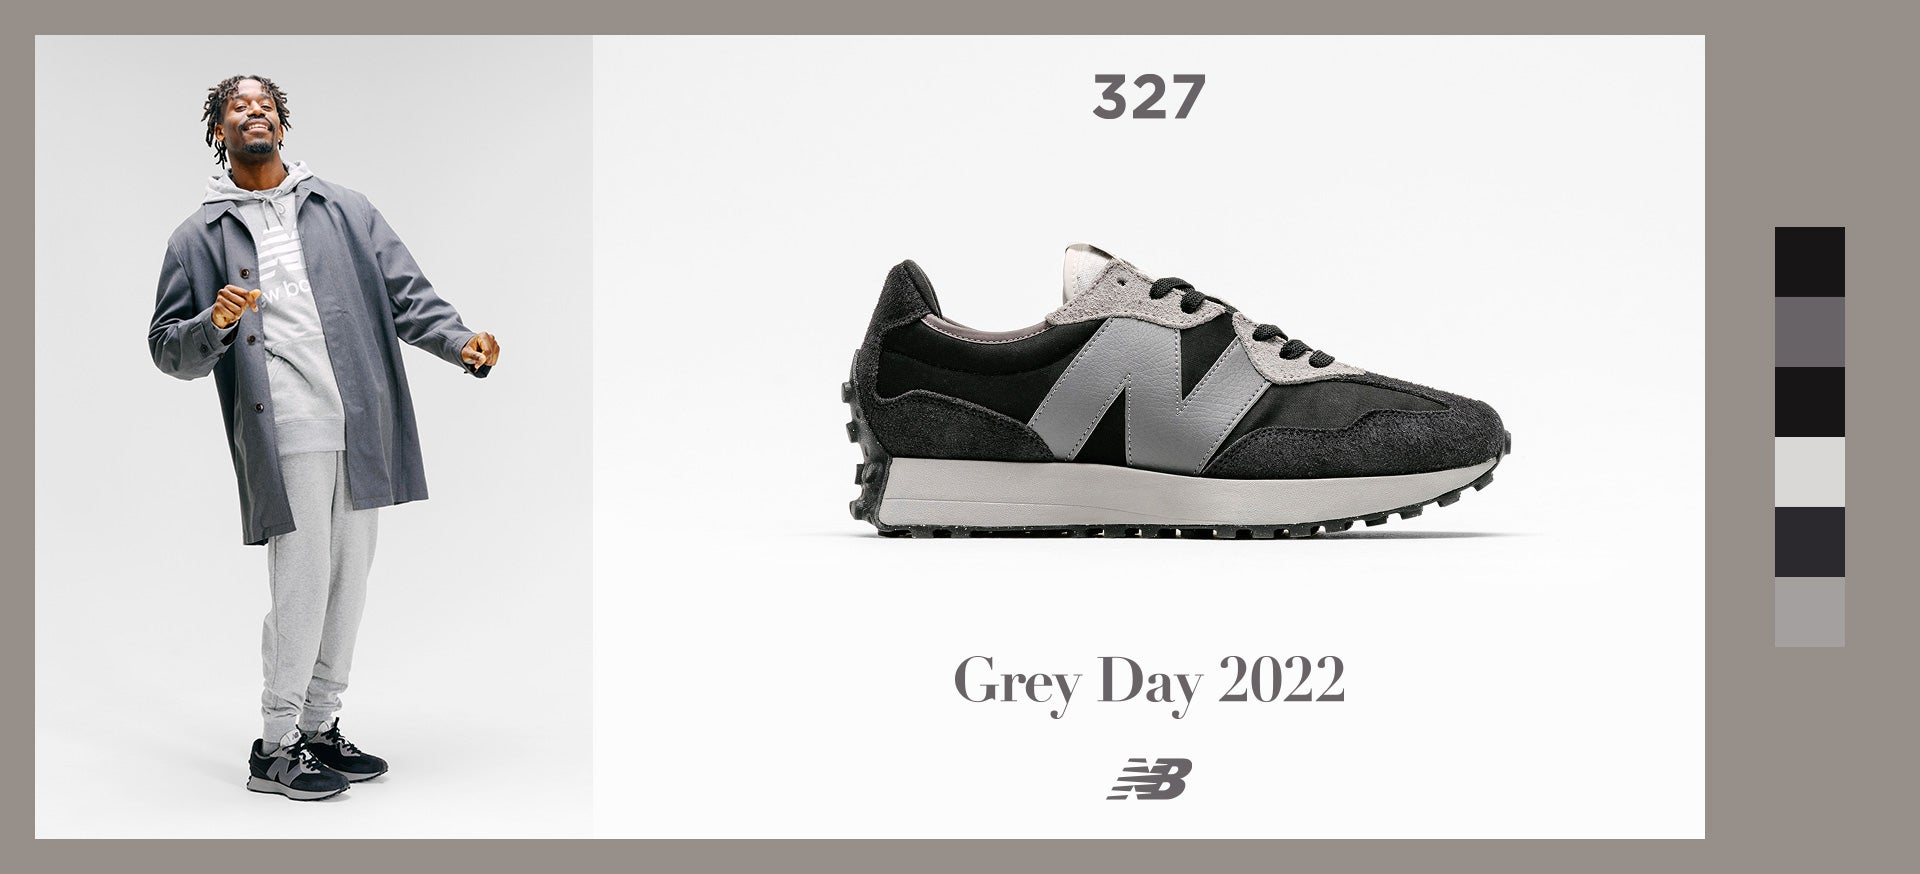 327, Grey Day 2022